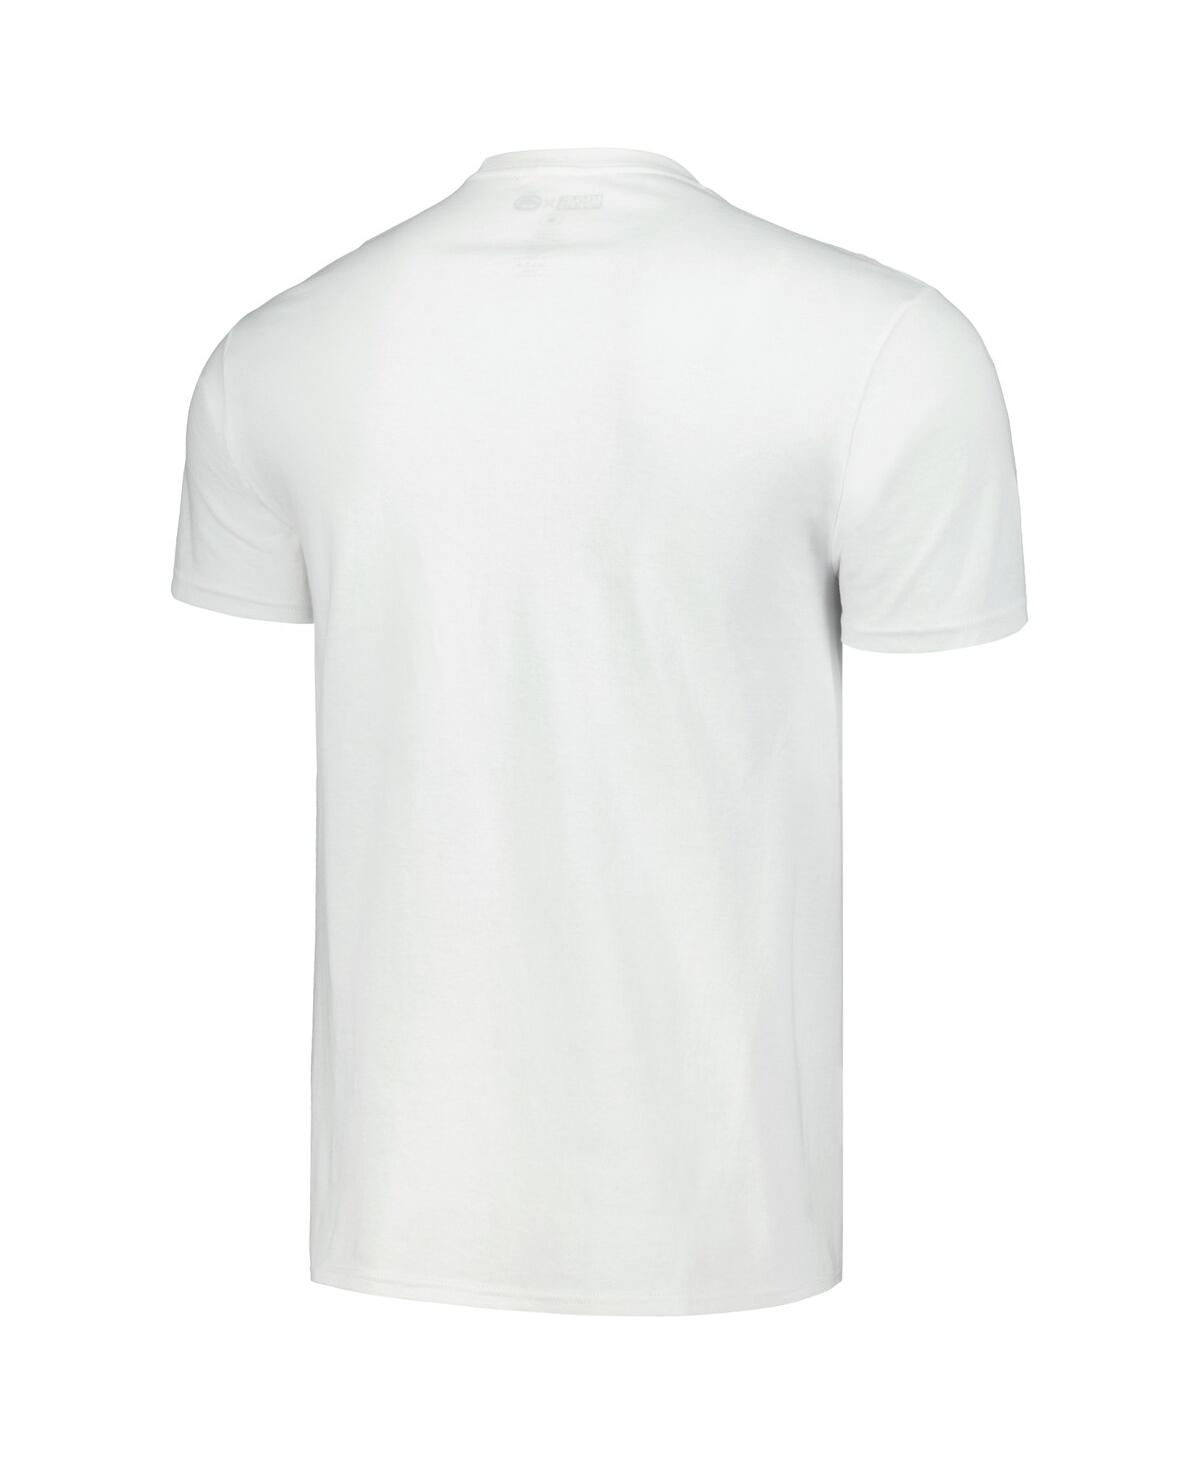 Shop Ecko Unltd Men's And Women's  Unlimited White Venom Vengeance T-shirt